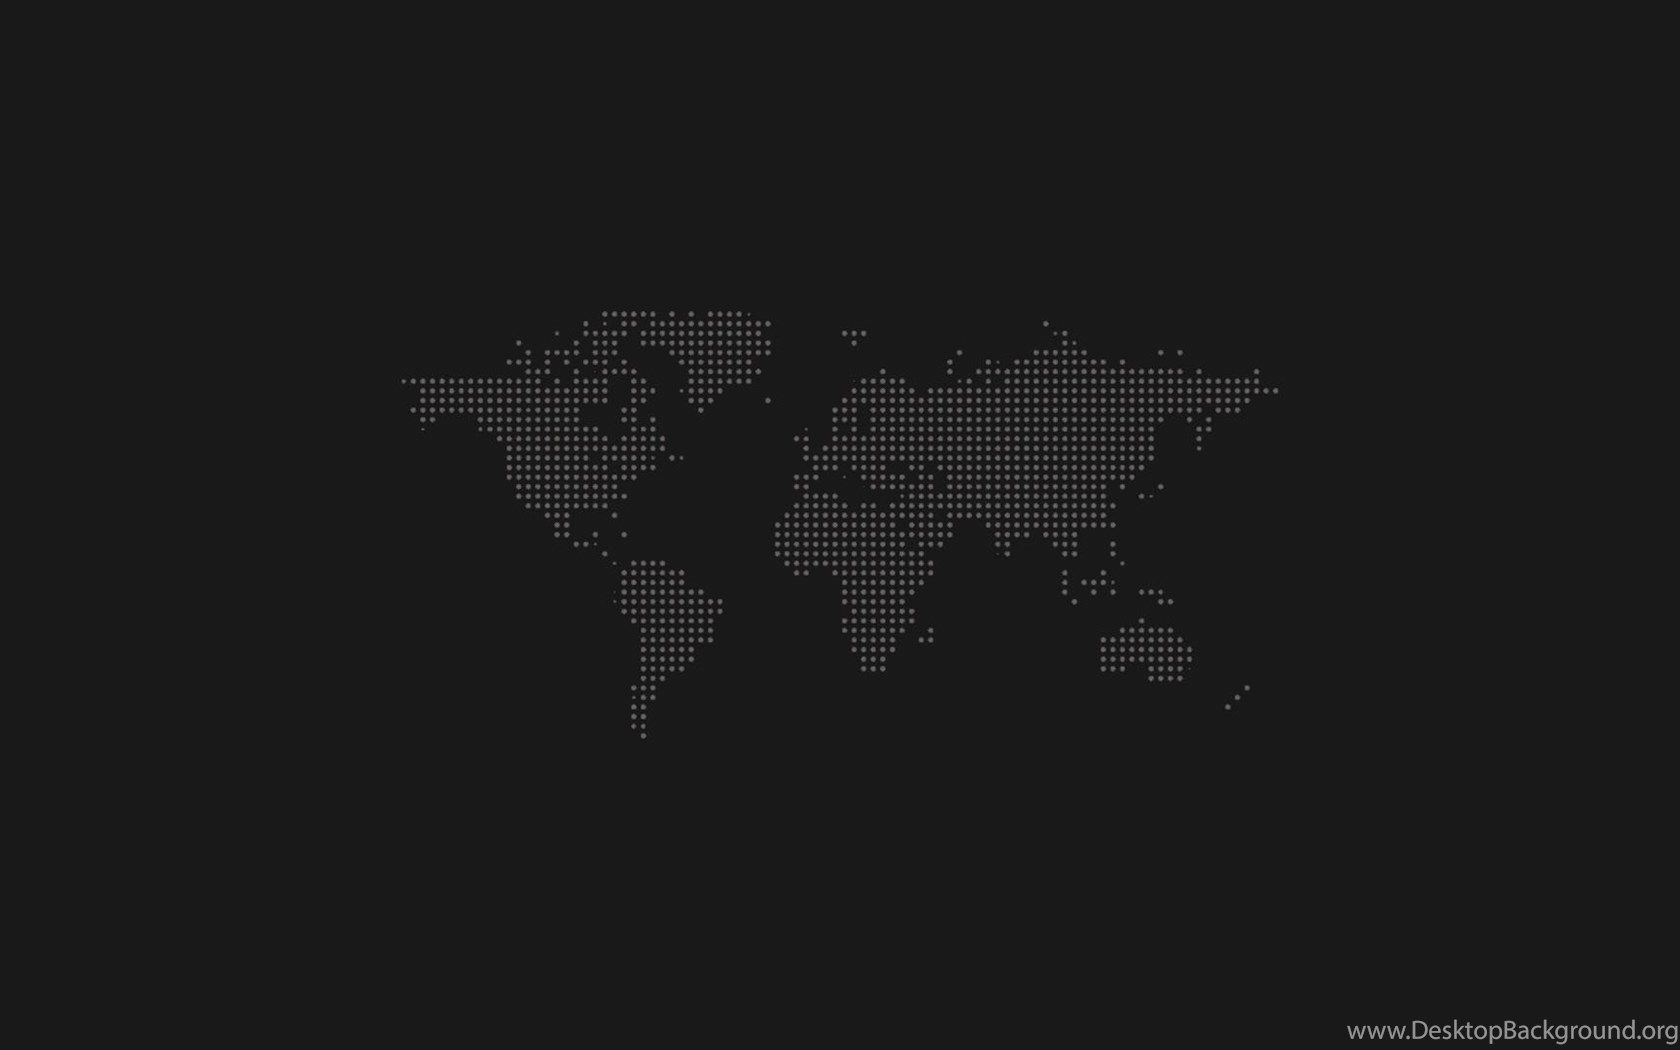 Dark World Map Wallpaper 4694 1920x1080 UMad.com Desktop Background